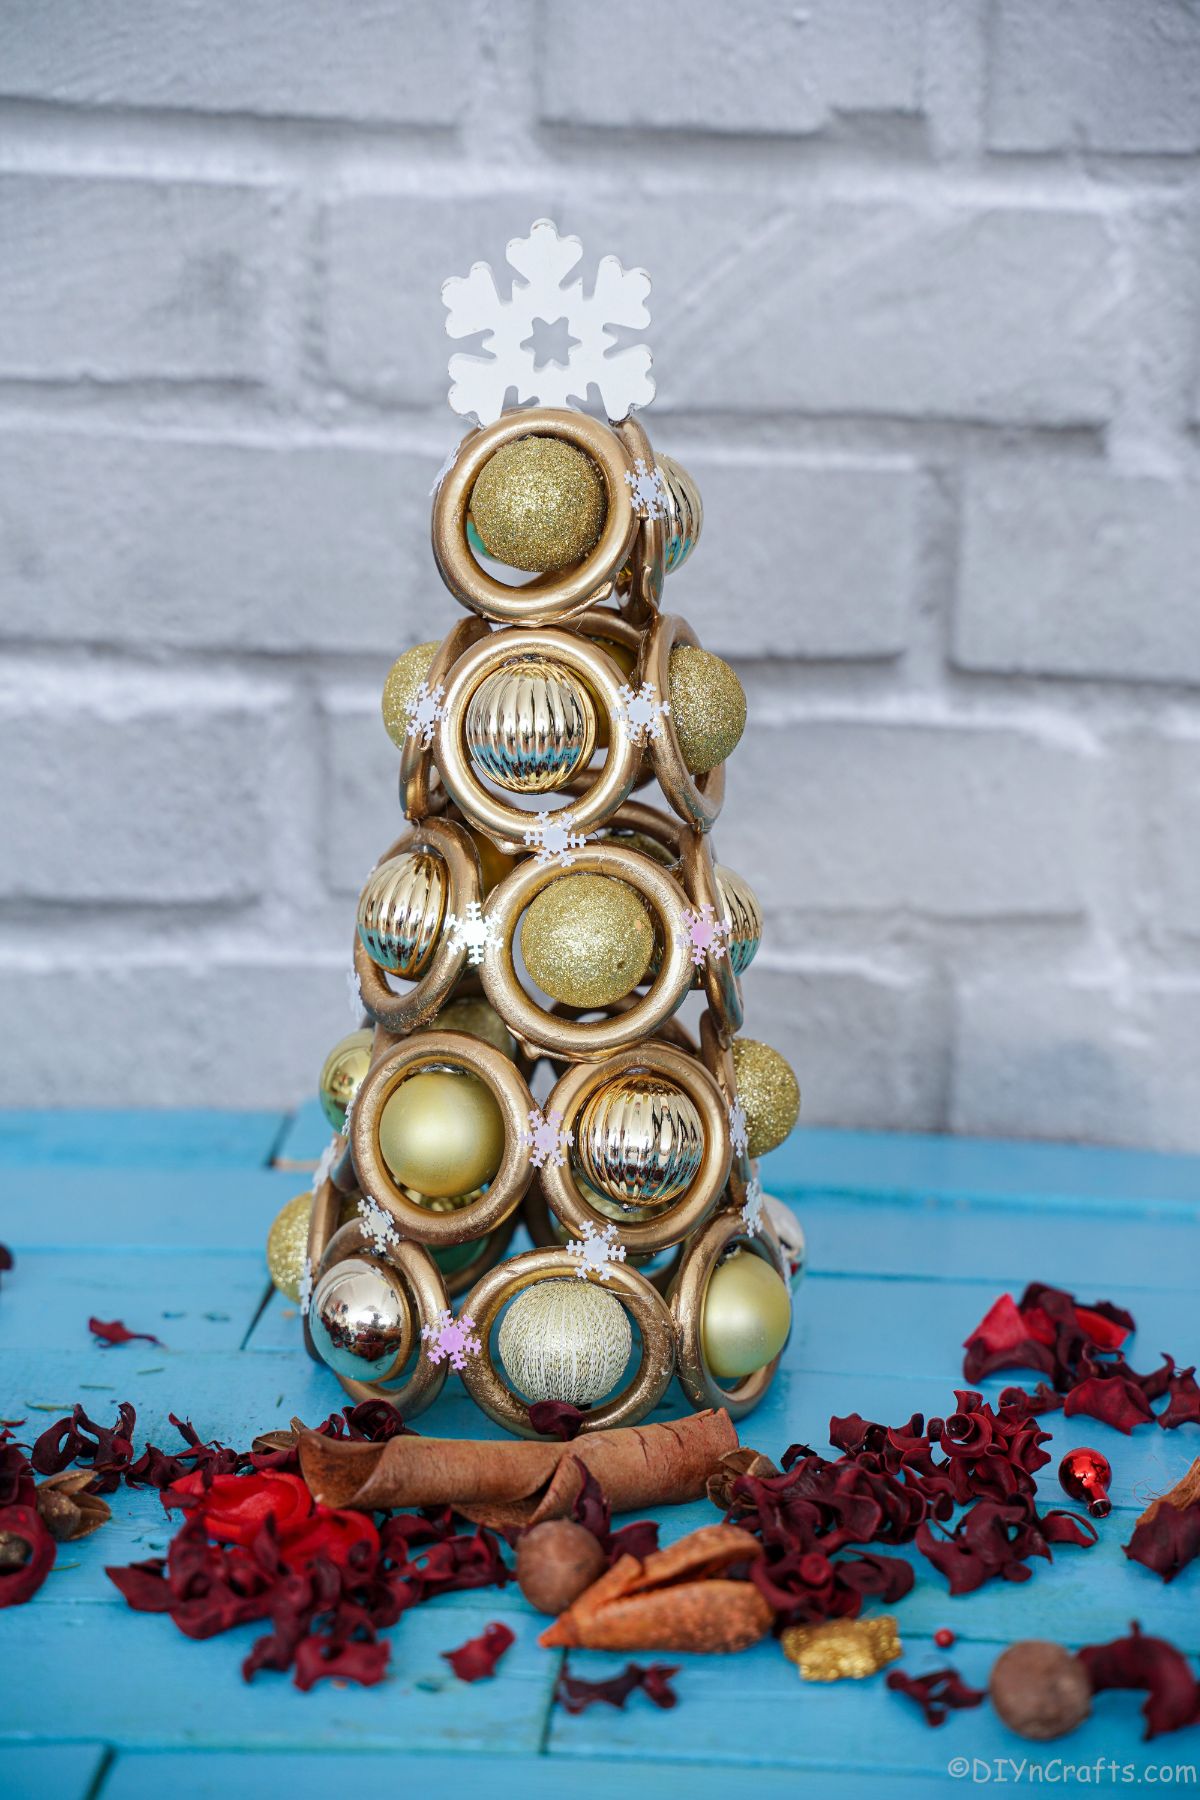 modra miza z zlatim božičnim drevescem pred sivo opeko